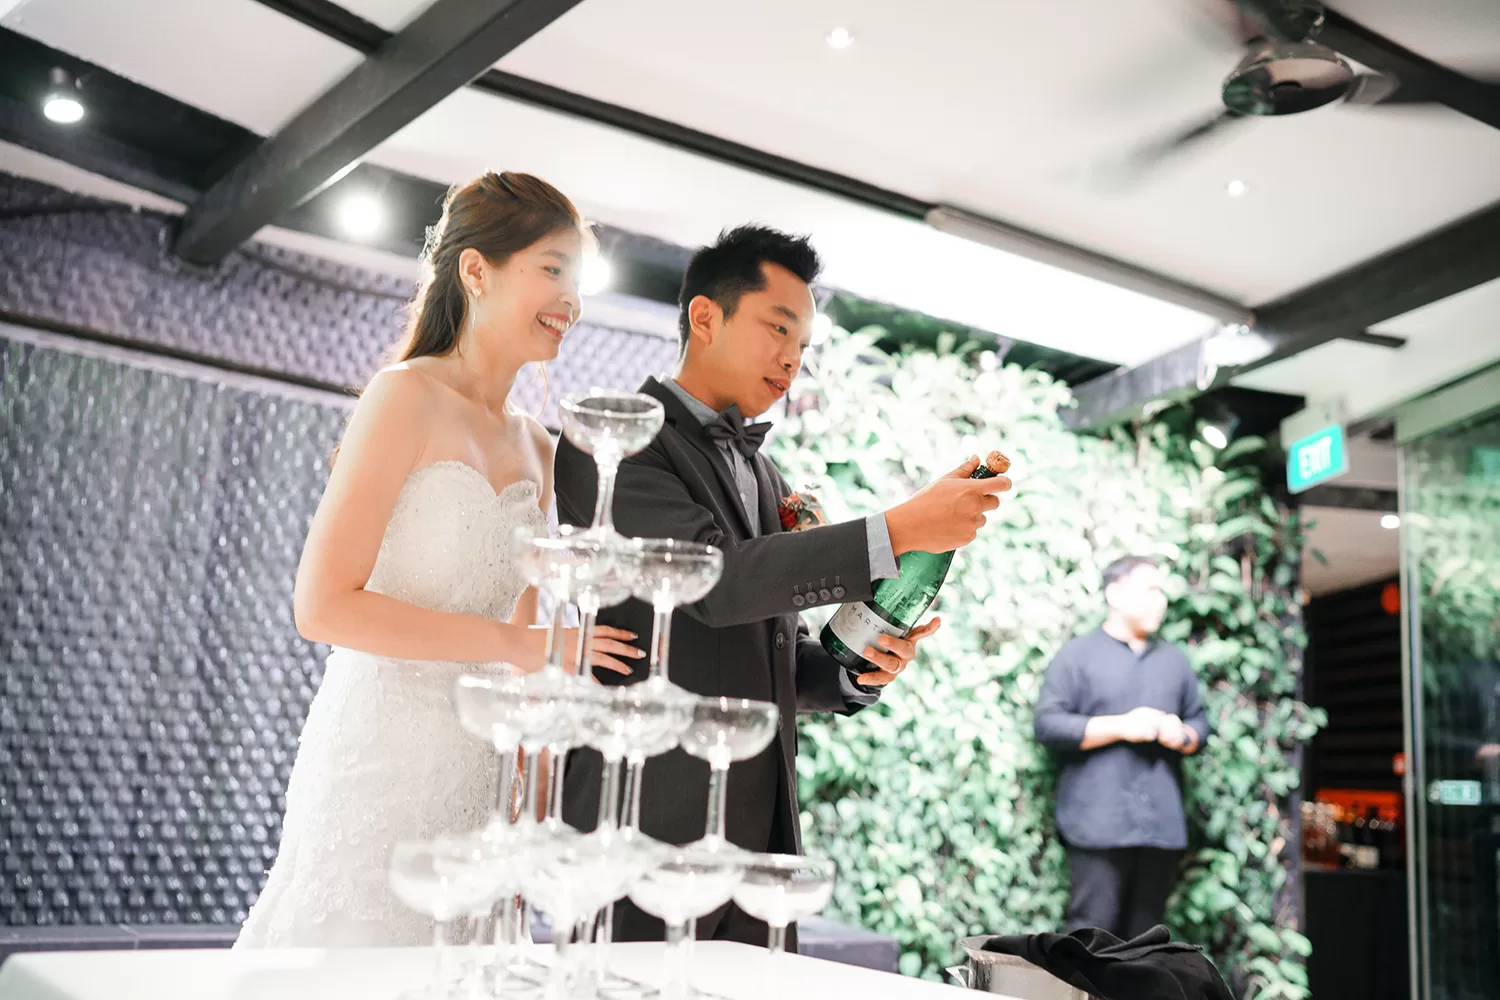 Actual day wedding at The Villa, Botanic Gardens, Singapore.